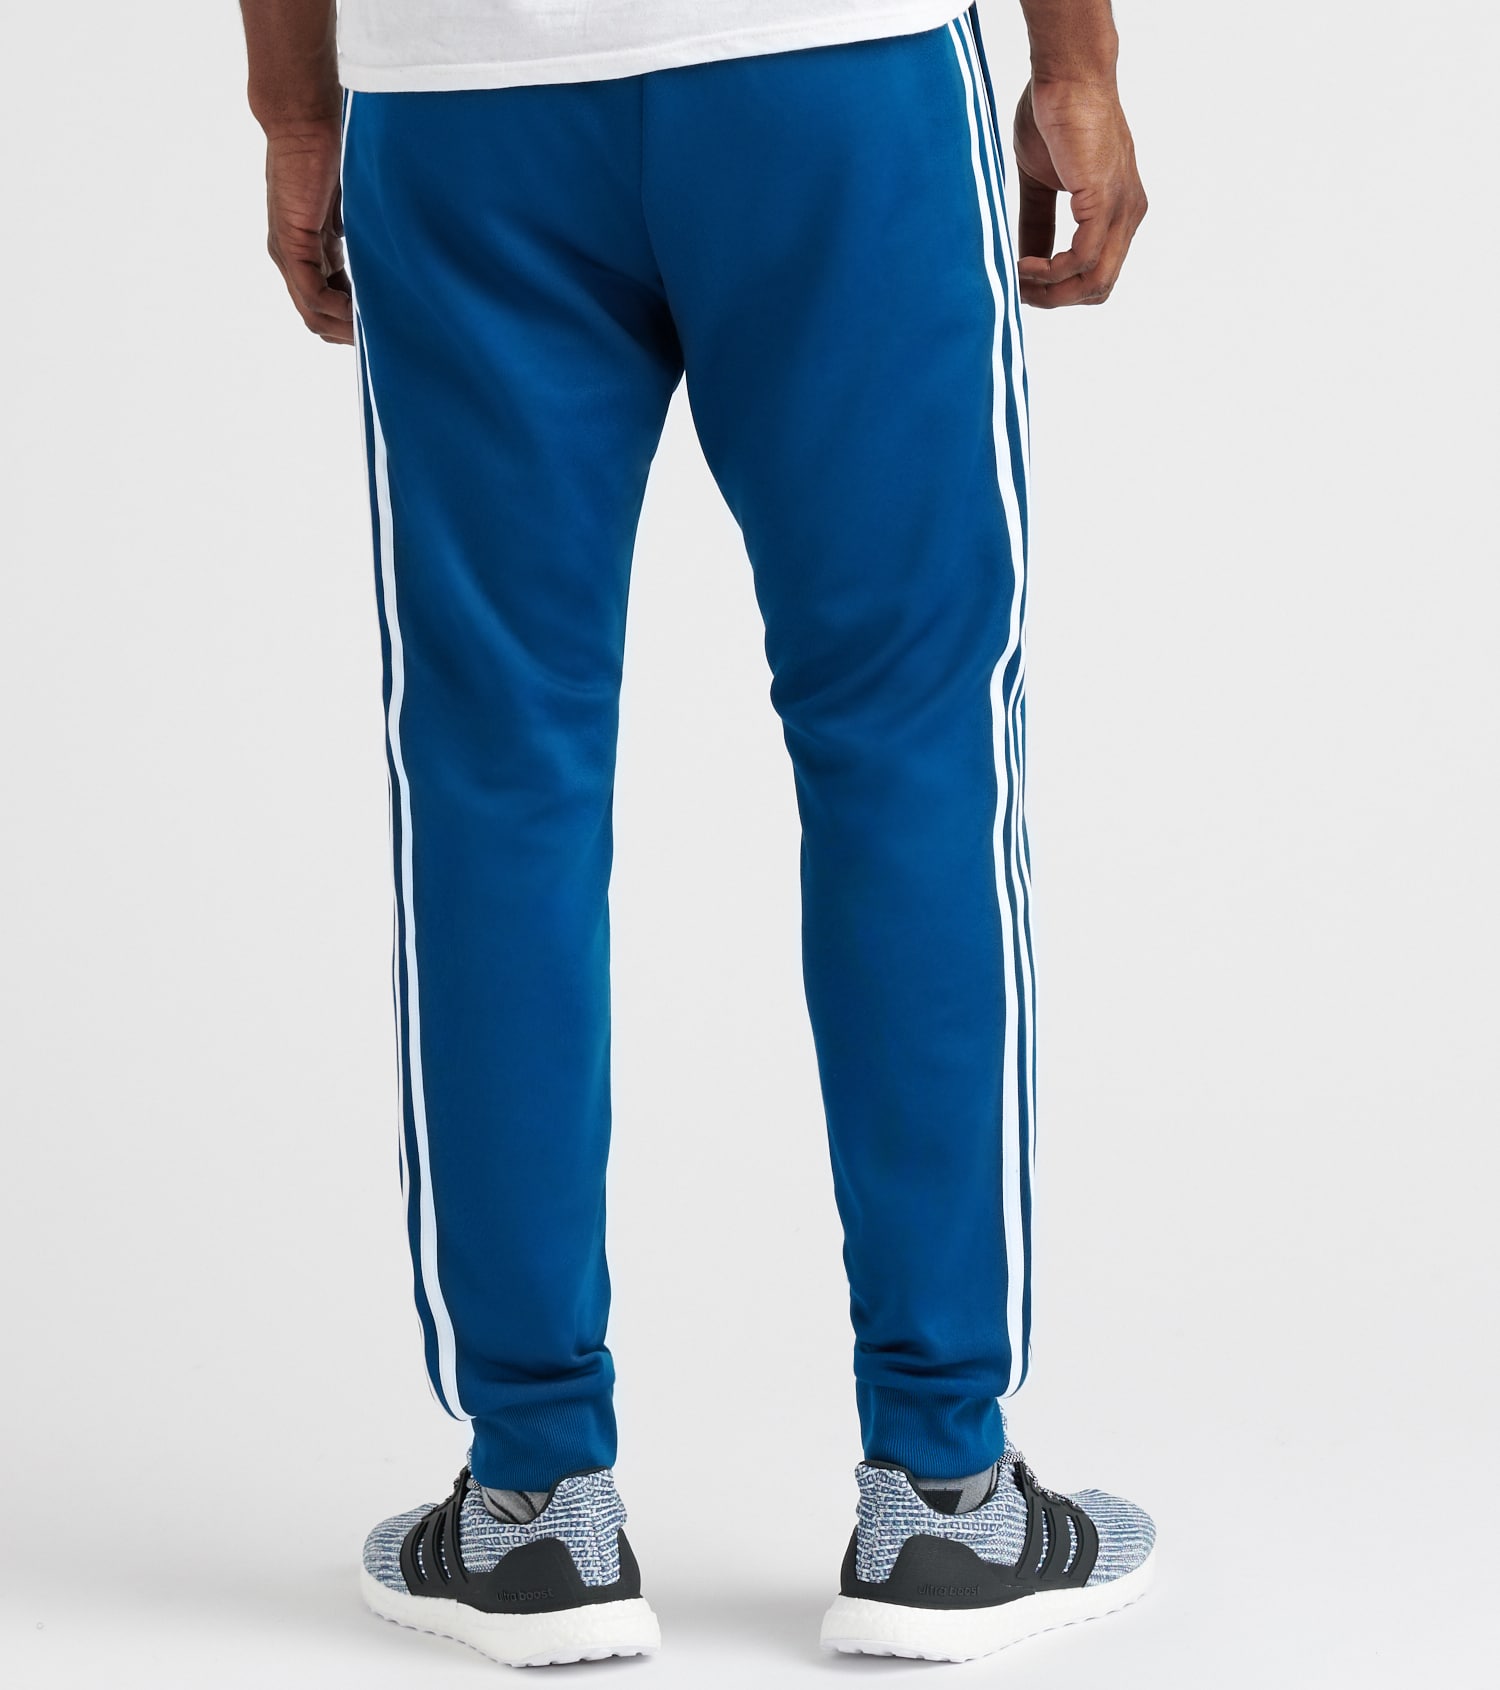 Adidas Superstar Track Pant (Dark Blue) - DV1533-486 | Jimmy Jazz